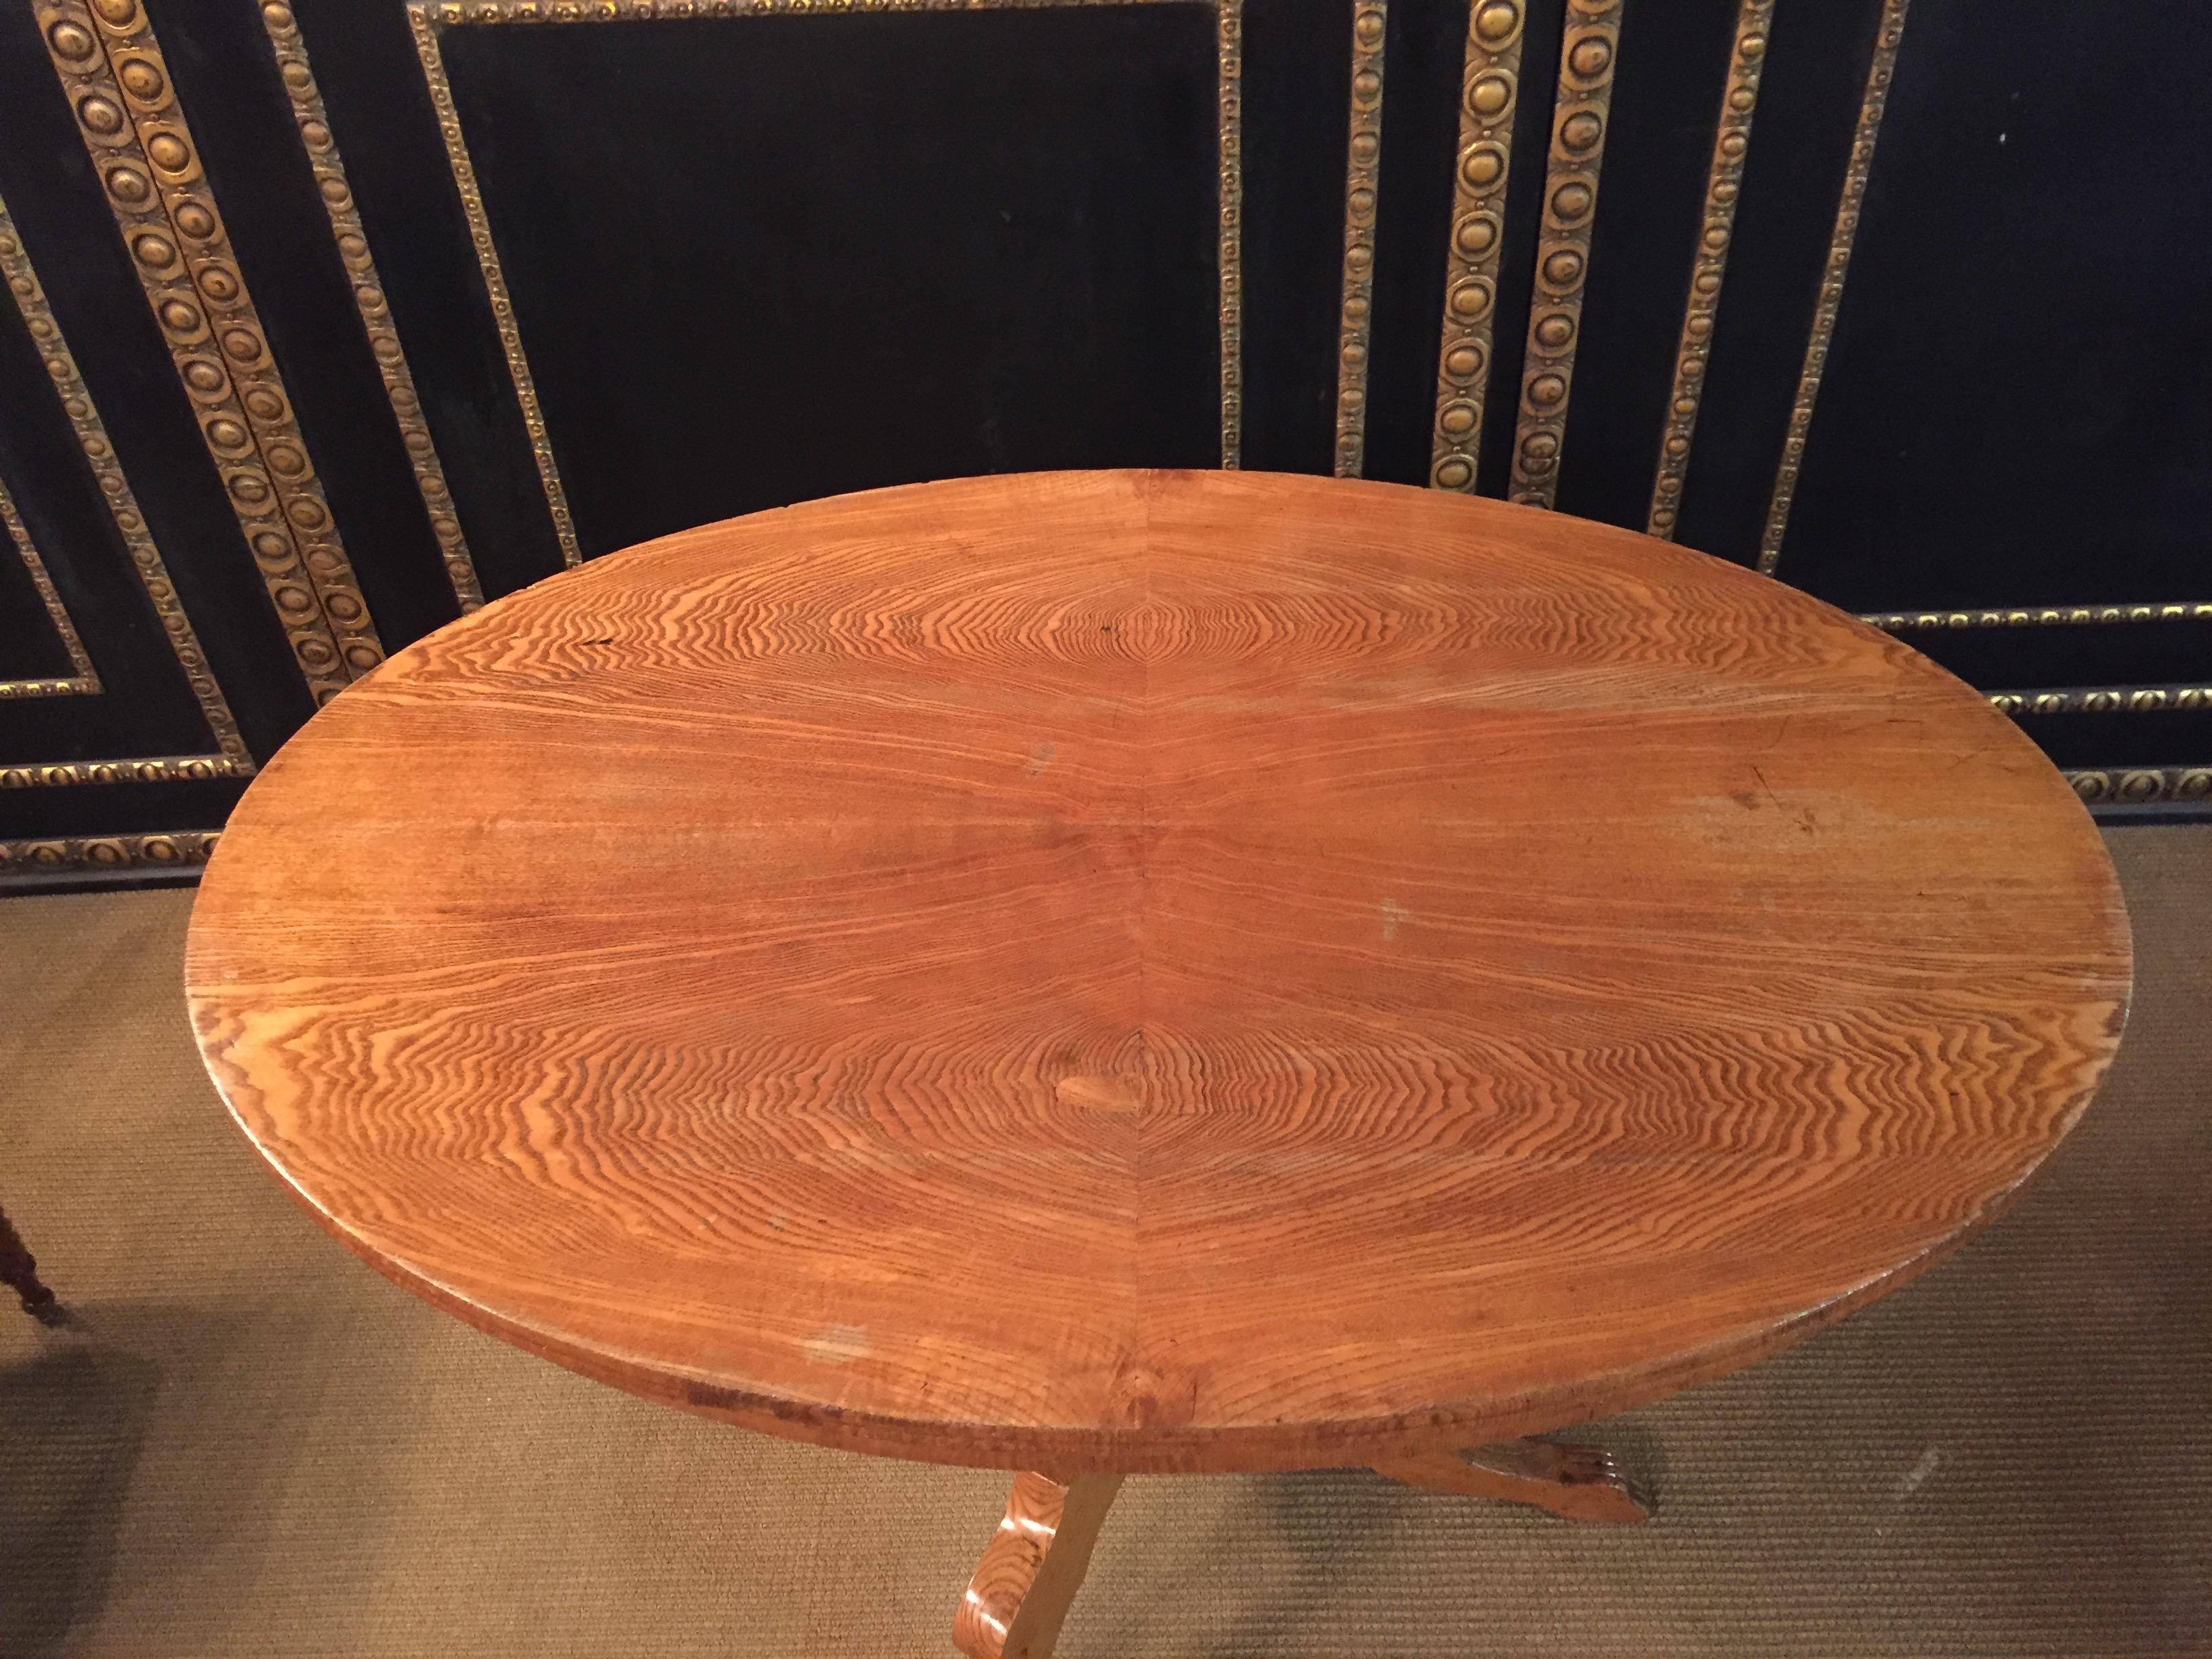 Woodwork Original Biedermeyer Table with 4 Chairs circa 1850 Ashwood